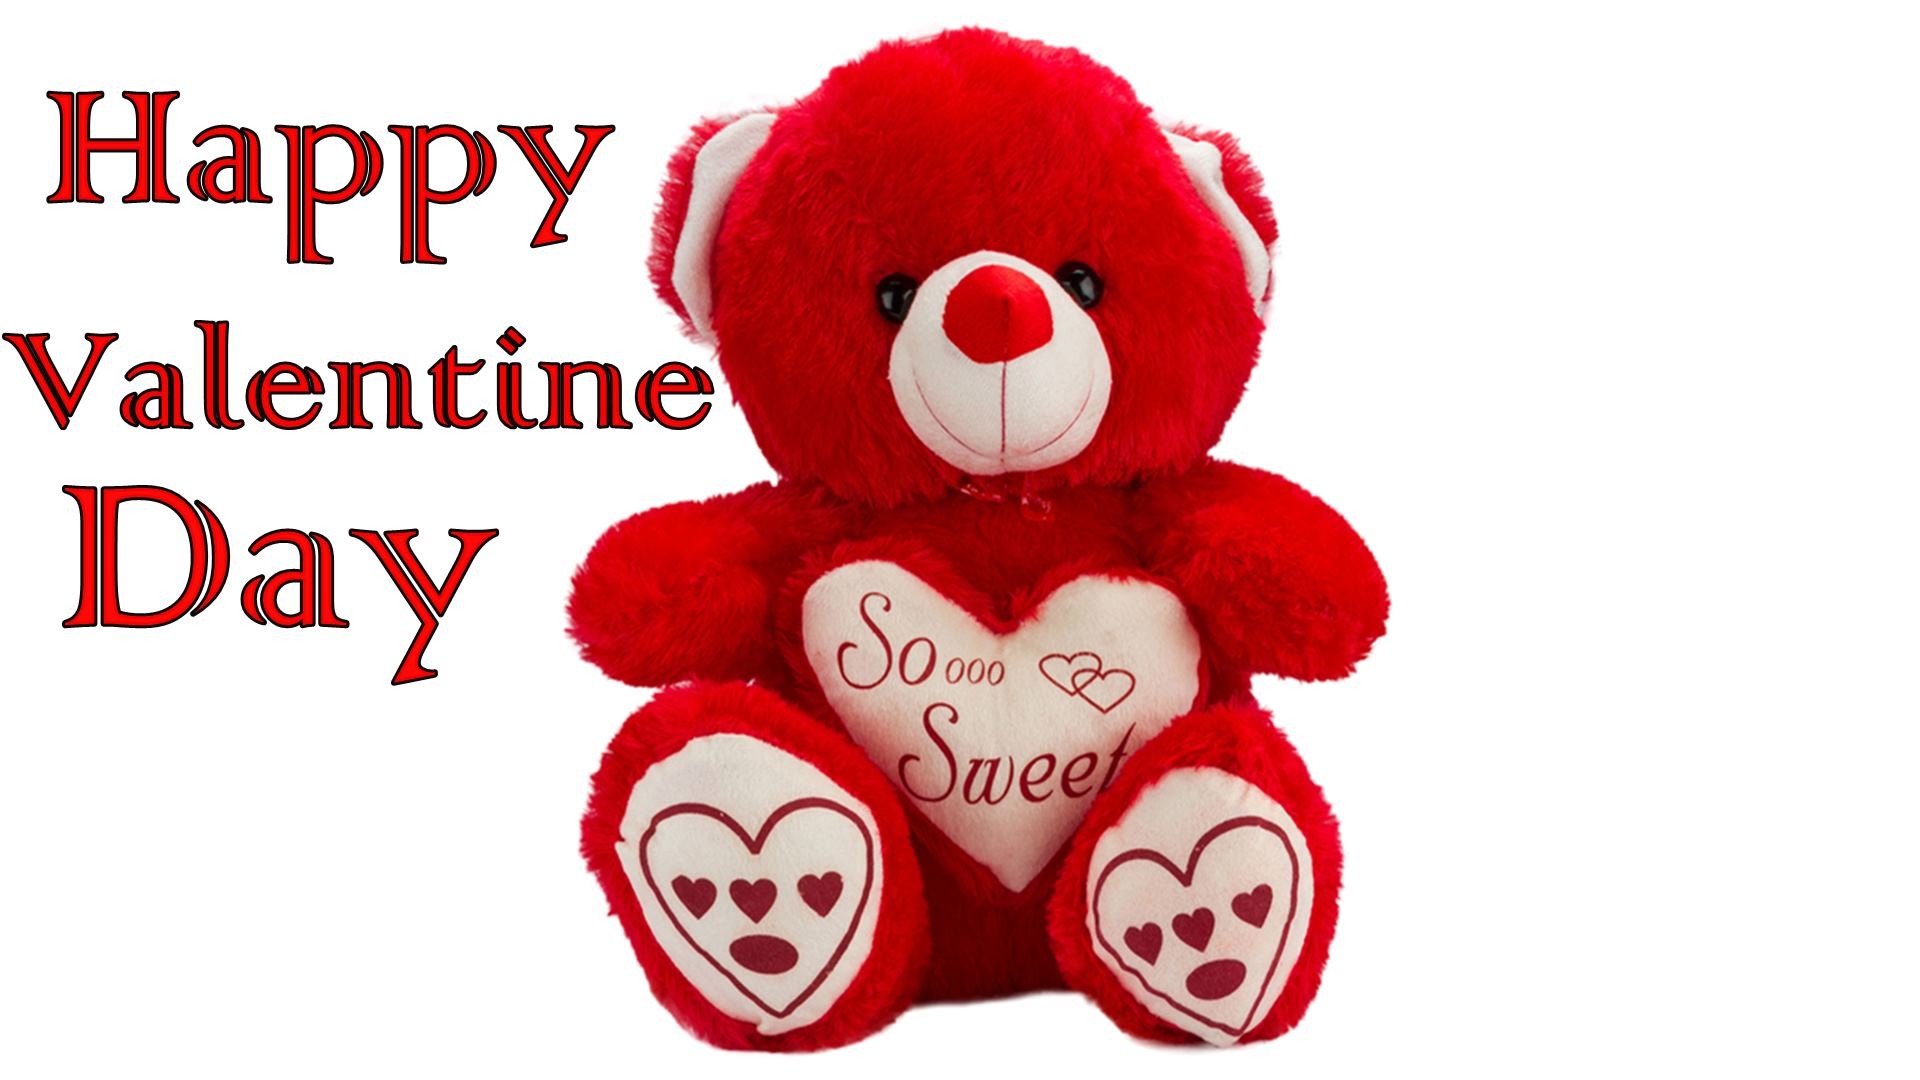 1920x1080 Teddy Bear Fiancee Wishing Valentine 2016 Images